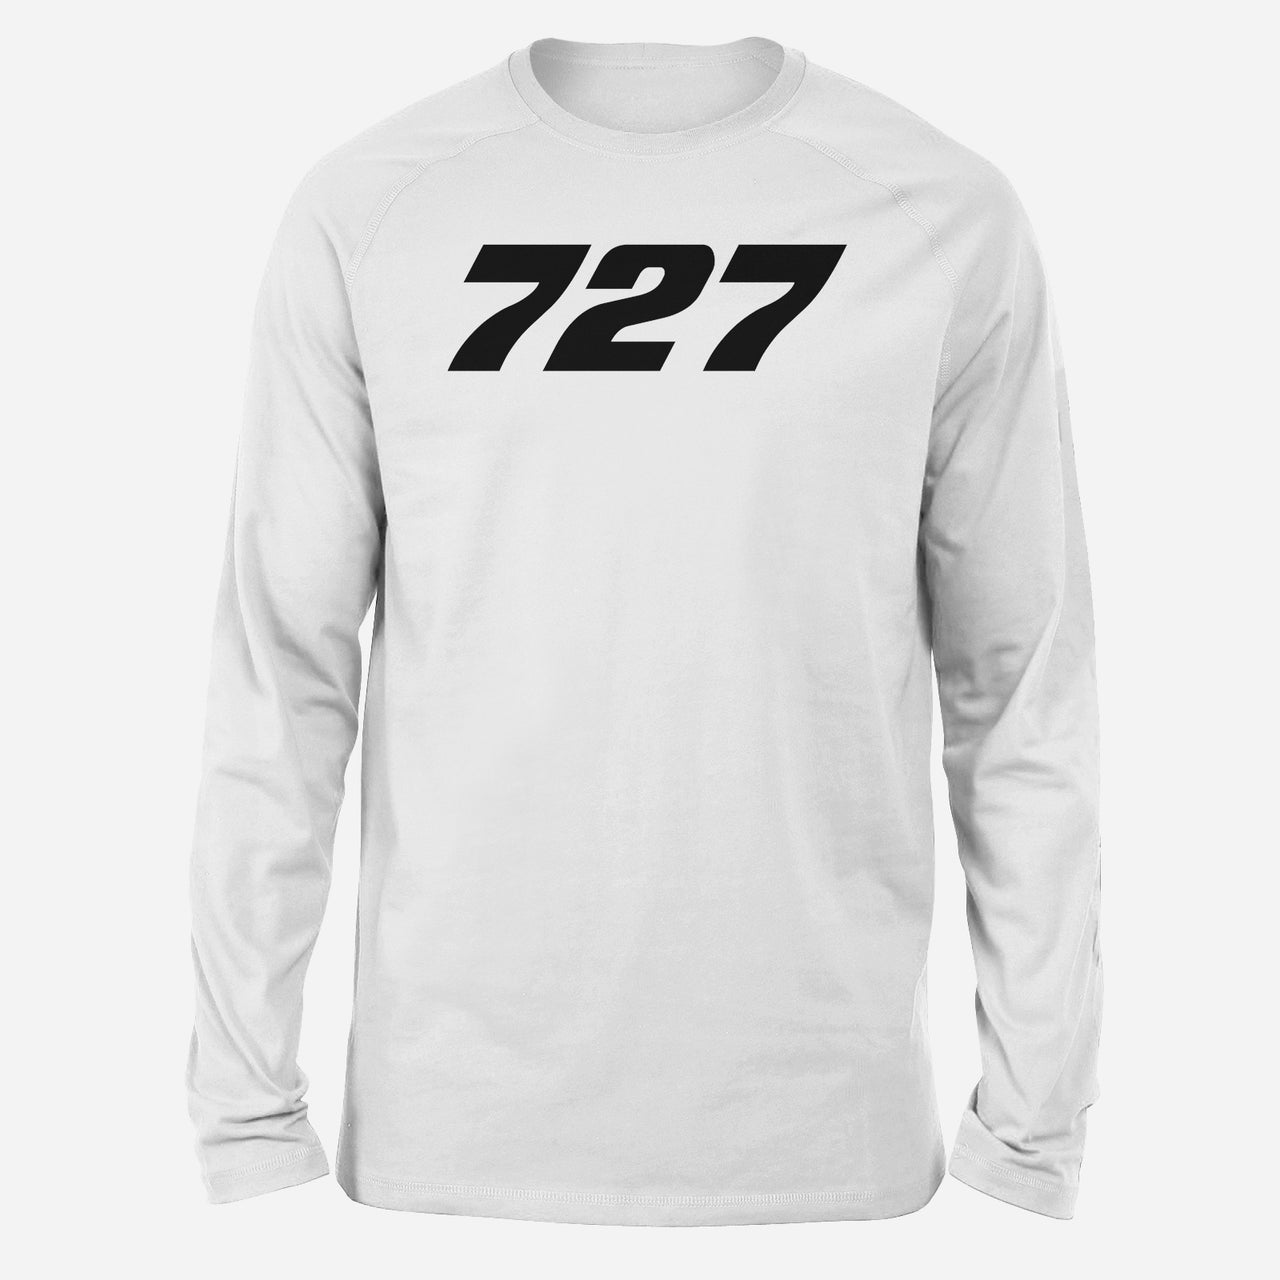 727 Flat Text Designed Long-Sleeve T-Shirts